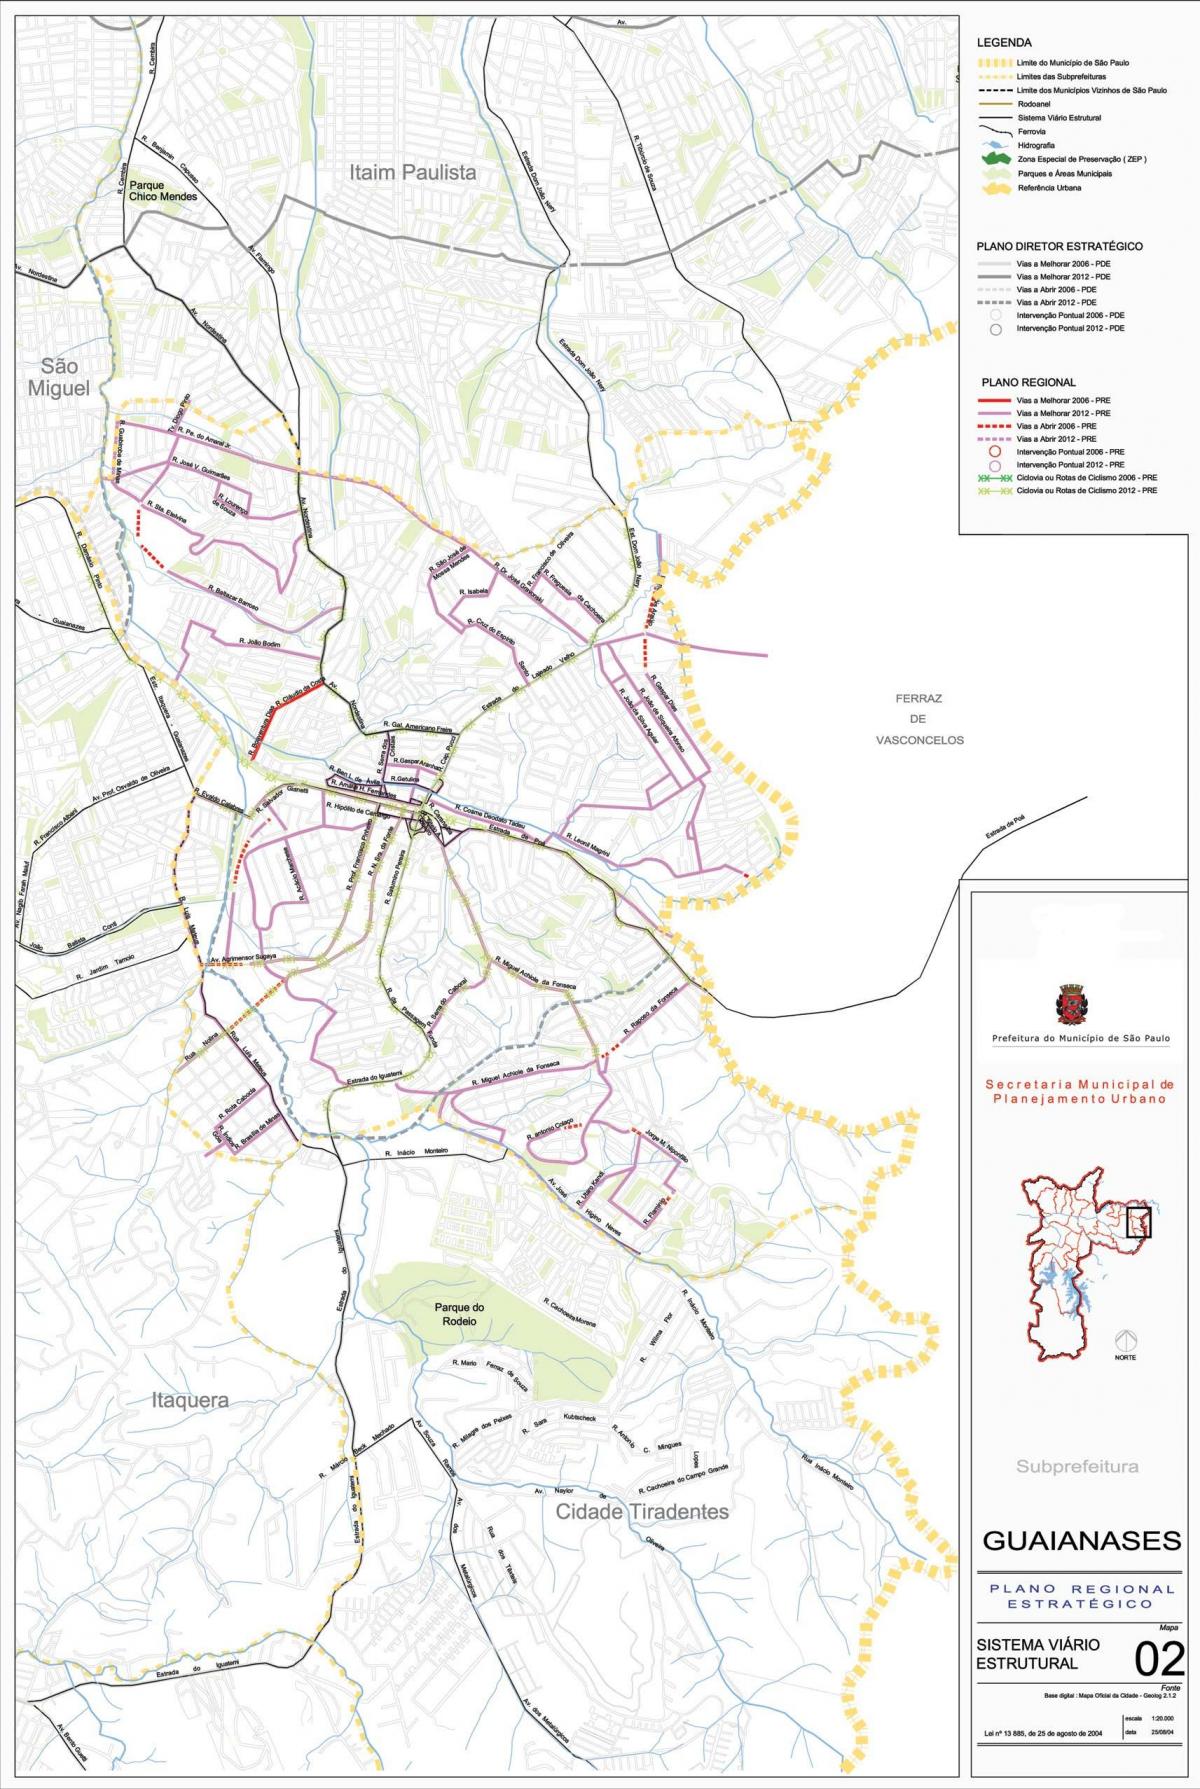 Guaianases haritası São Paulo - Yollar